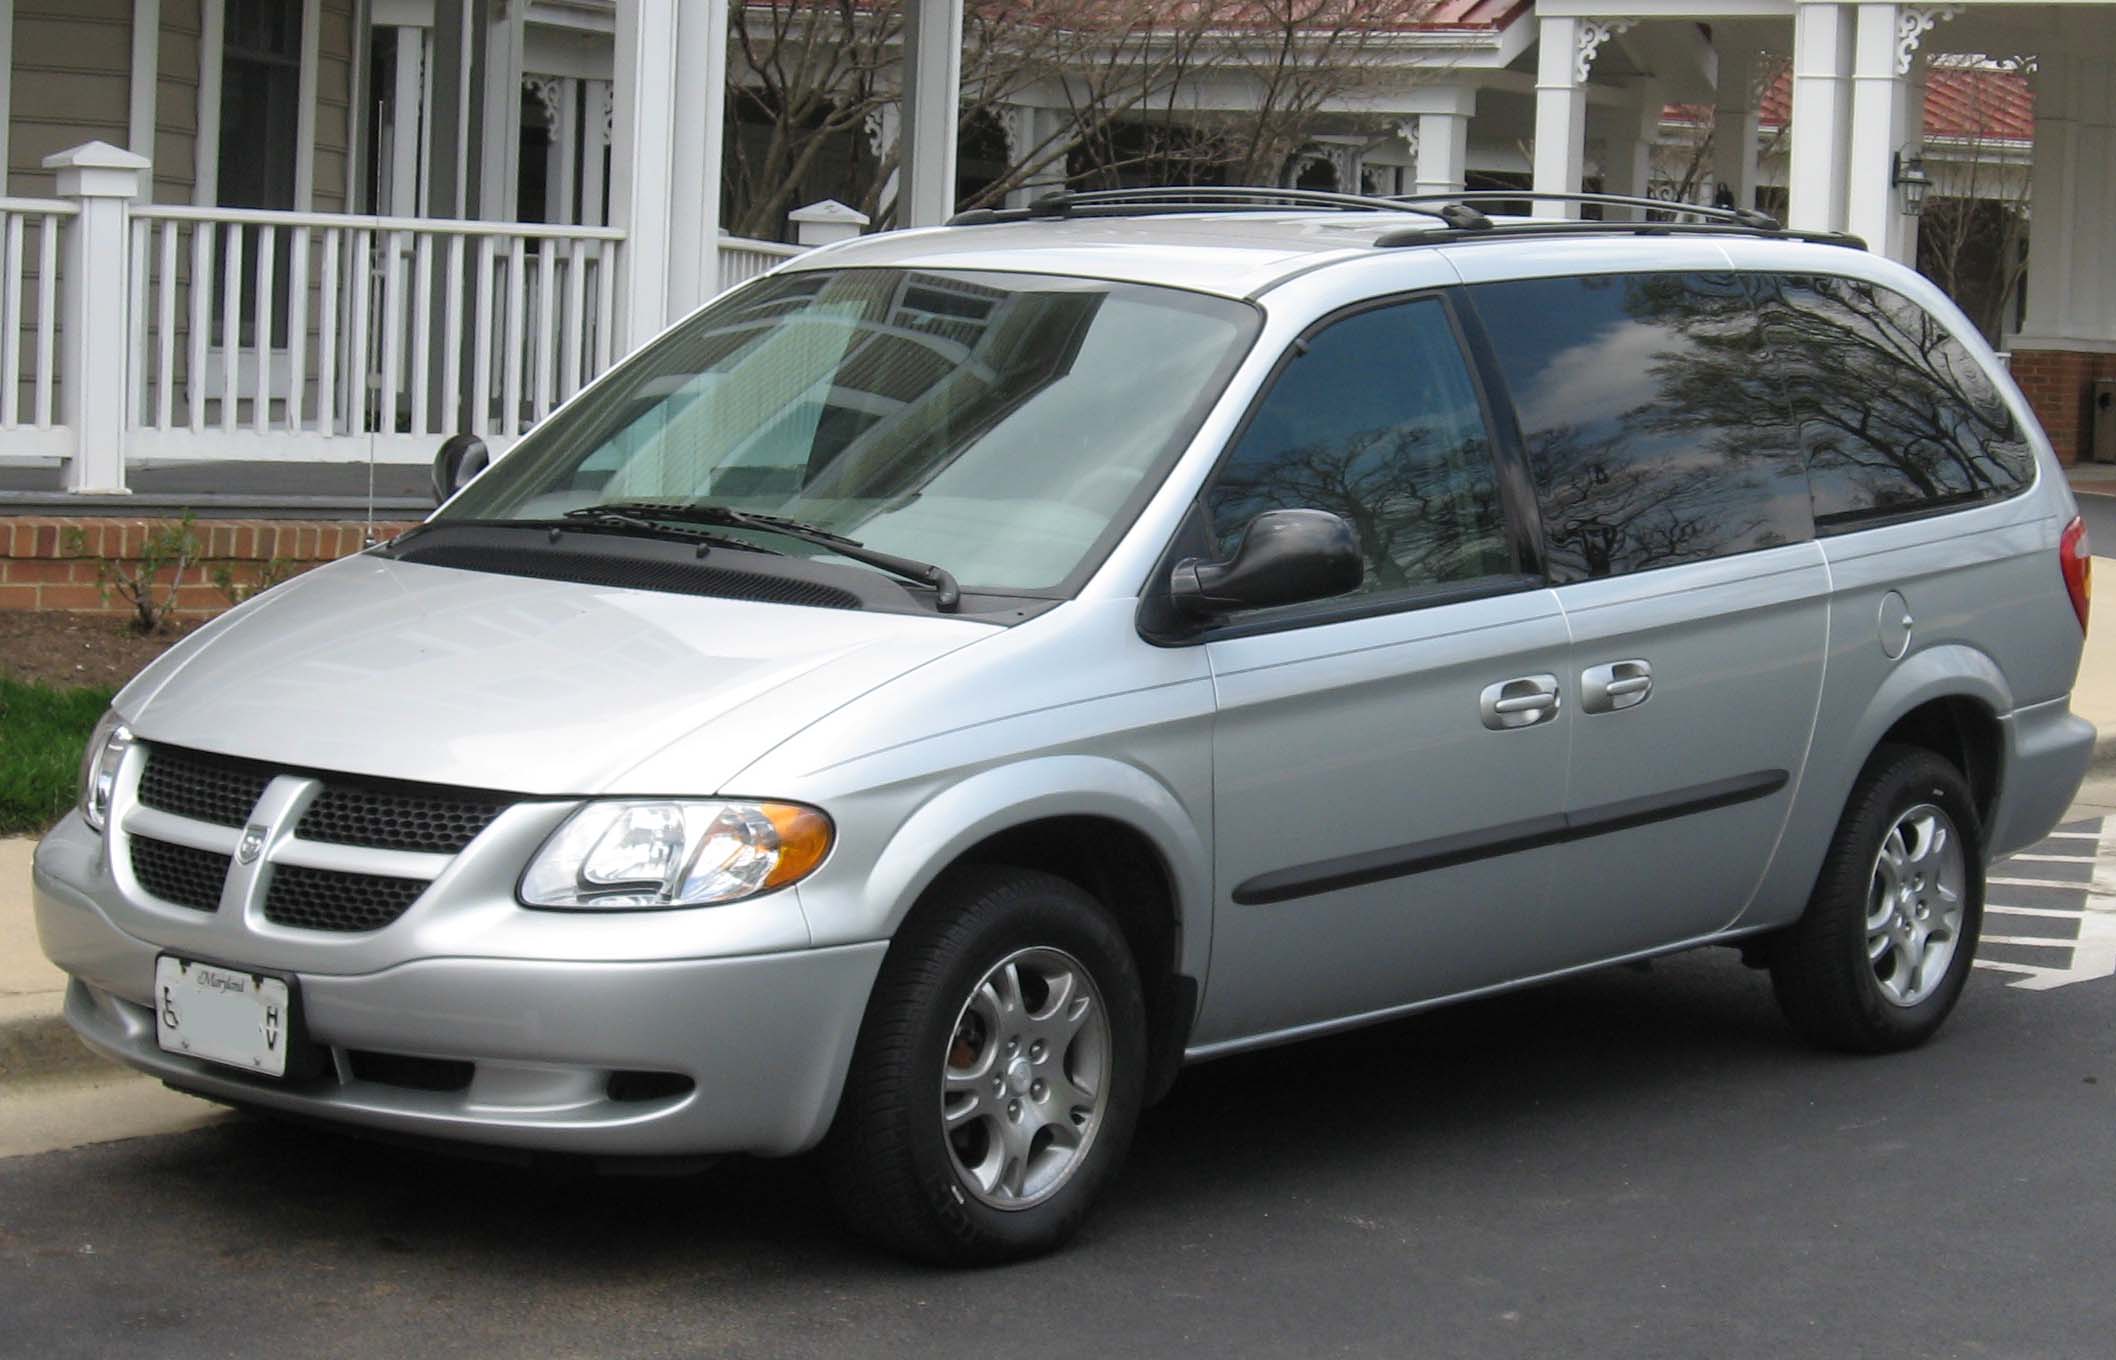 Dossier: Dodge Grand Caravan 2001-2004.jpg - Wikimedia Commons